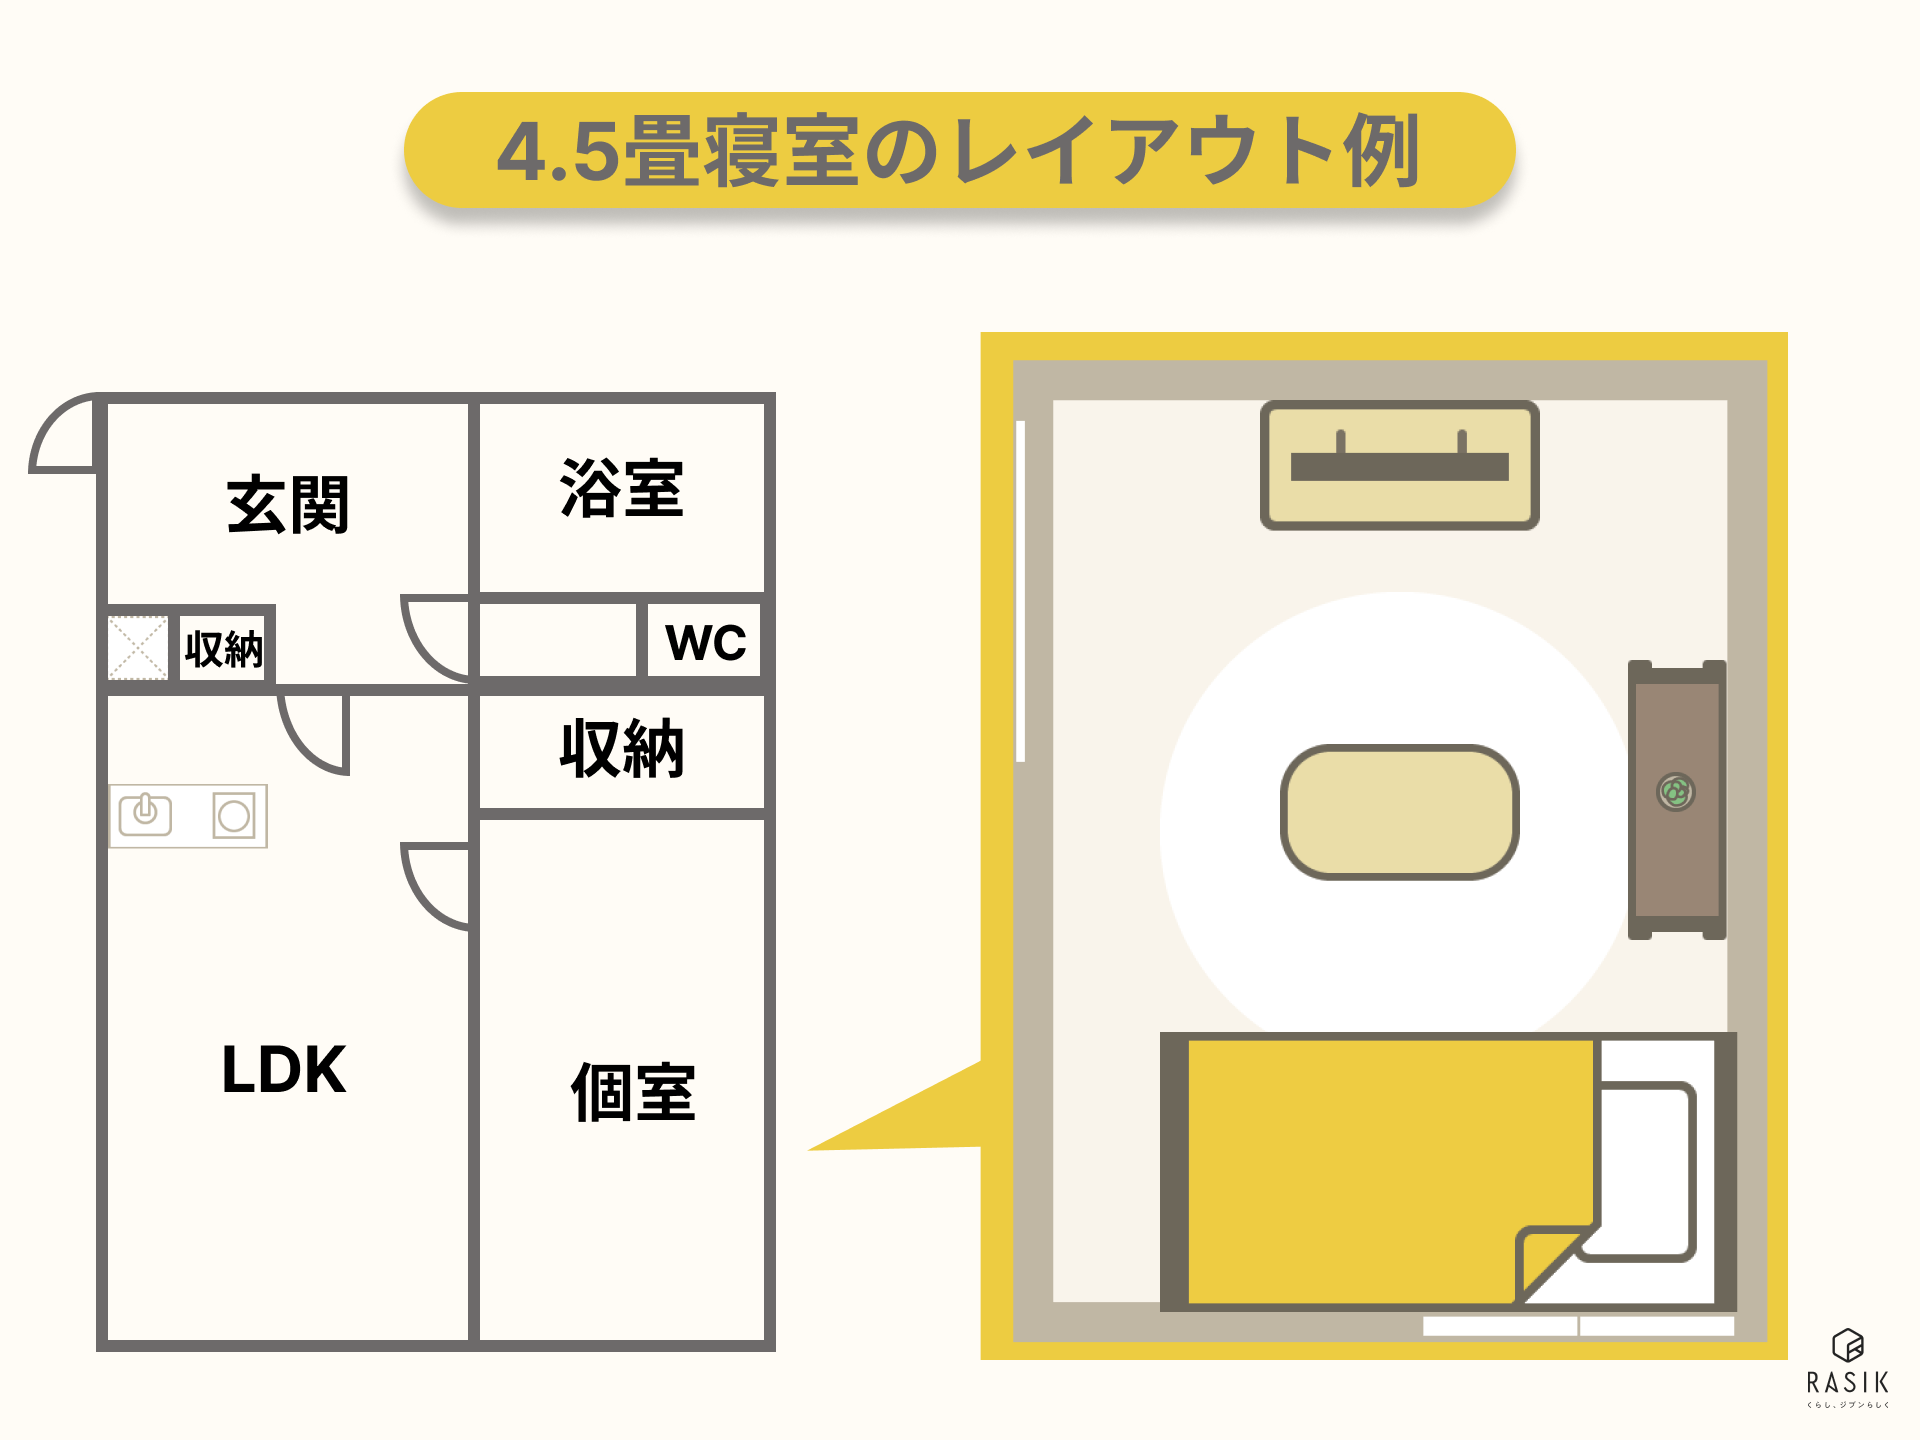 1LDKの4.5畳寝室のレイアウト例の画像